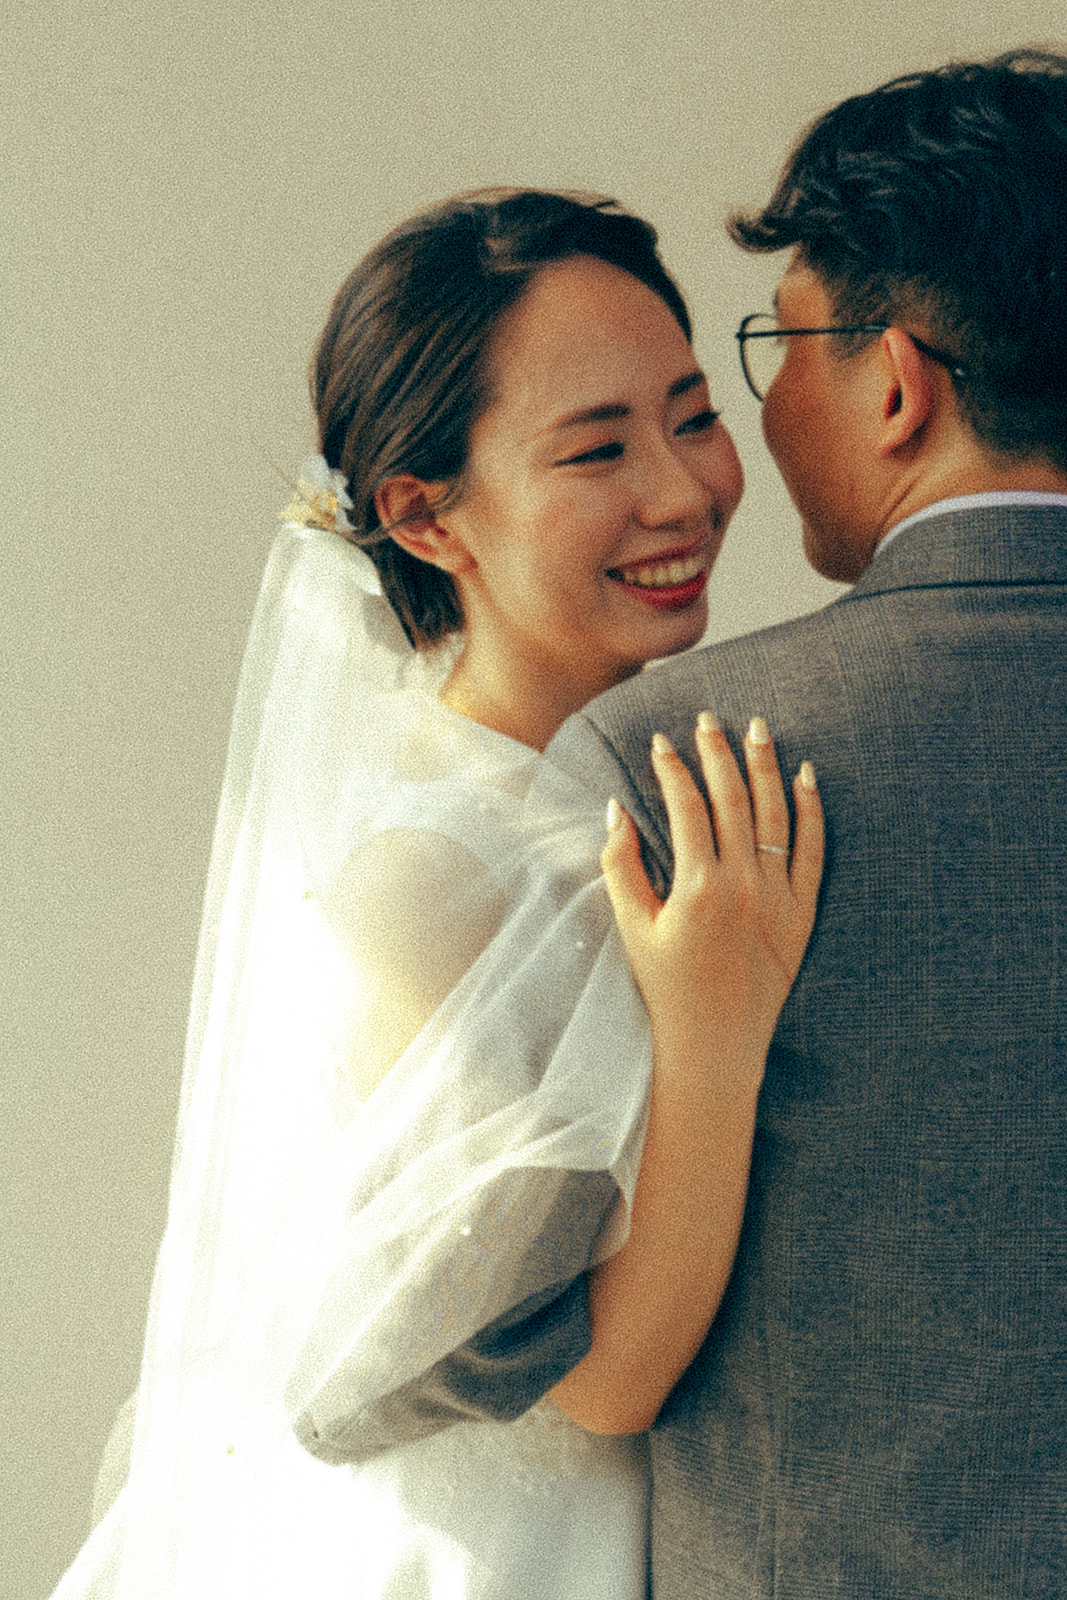 Authentic happy Pre-wedding photography in Saigon